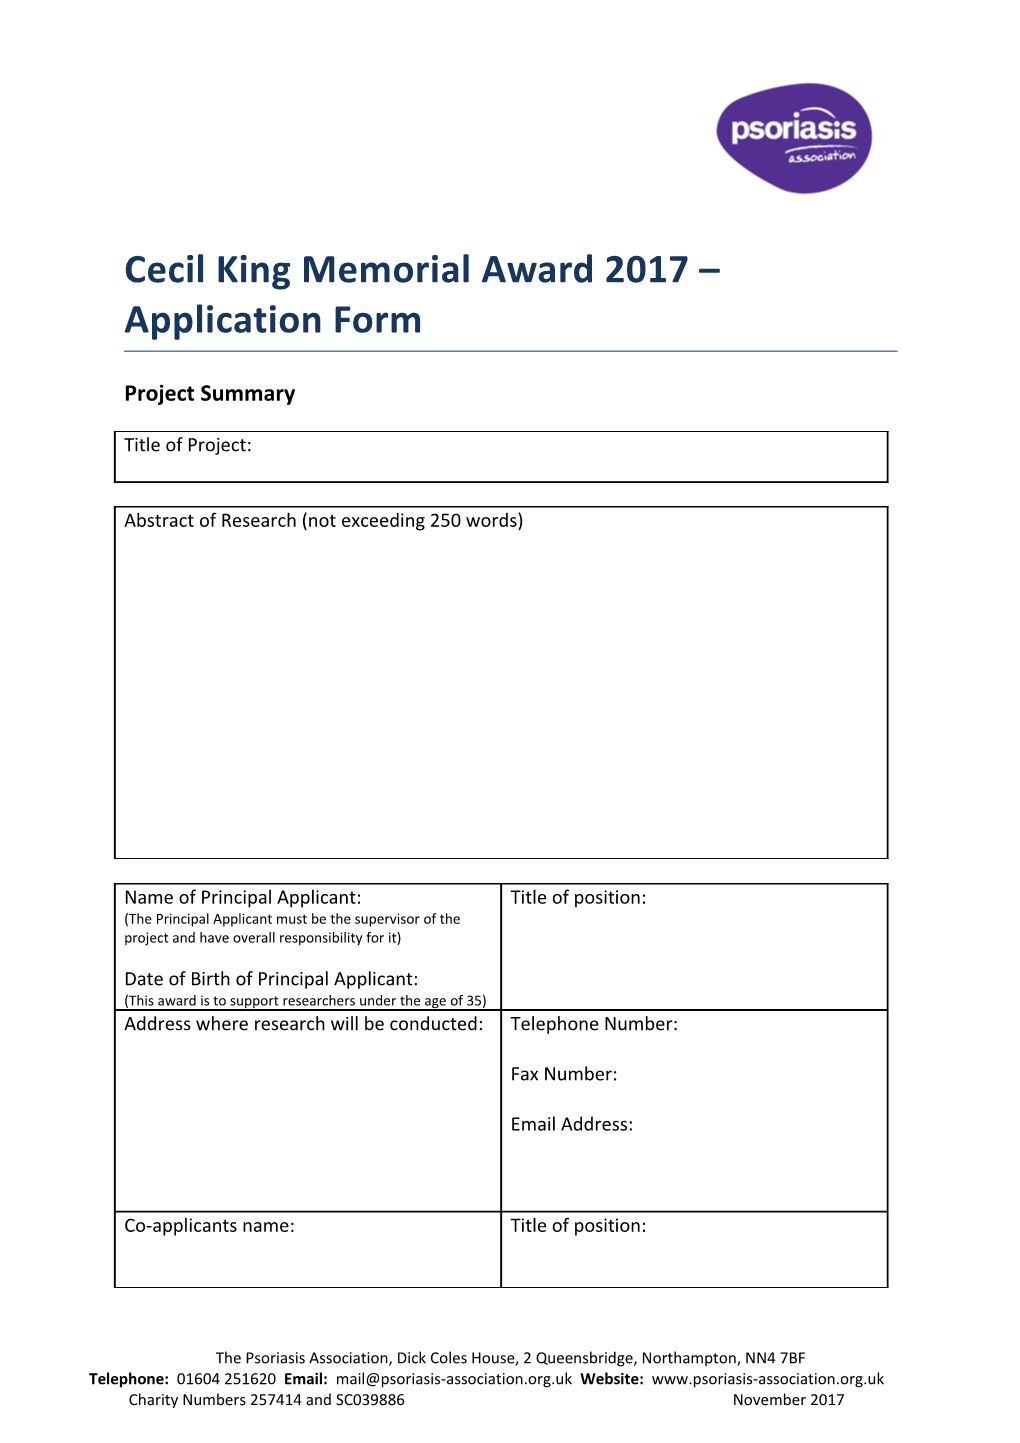 Cecil King Memorial Award 2017 Application Form